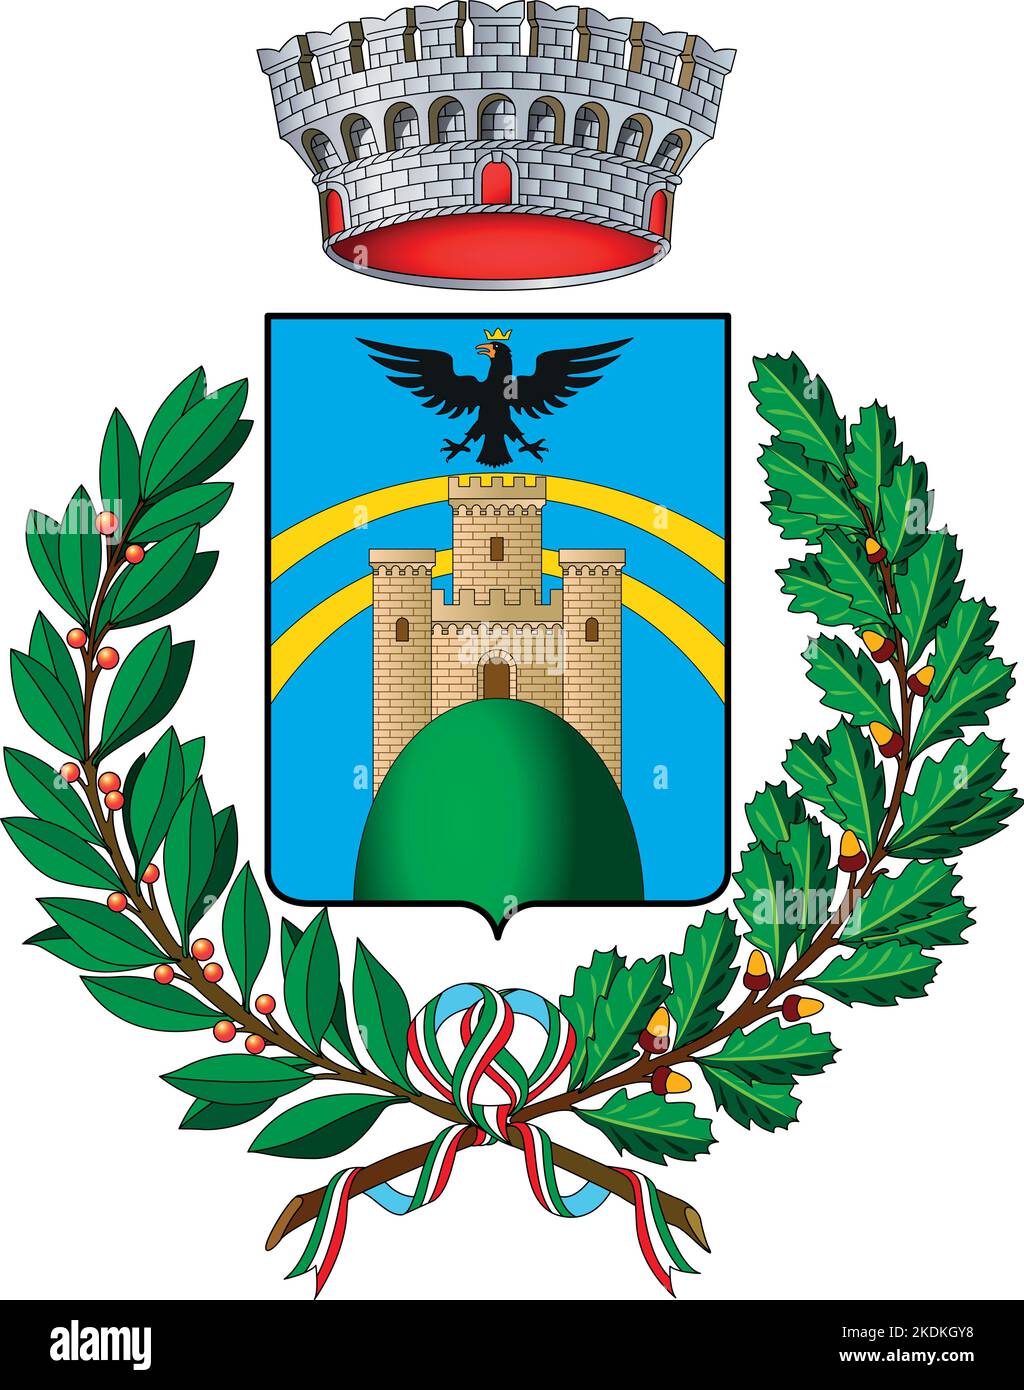 Wappen der Gemeinde Sestola, Provinz Modena, Emilia-Romagna, Italien, Vektorgrafik Stock Vektor